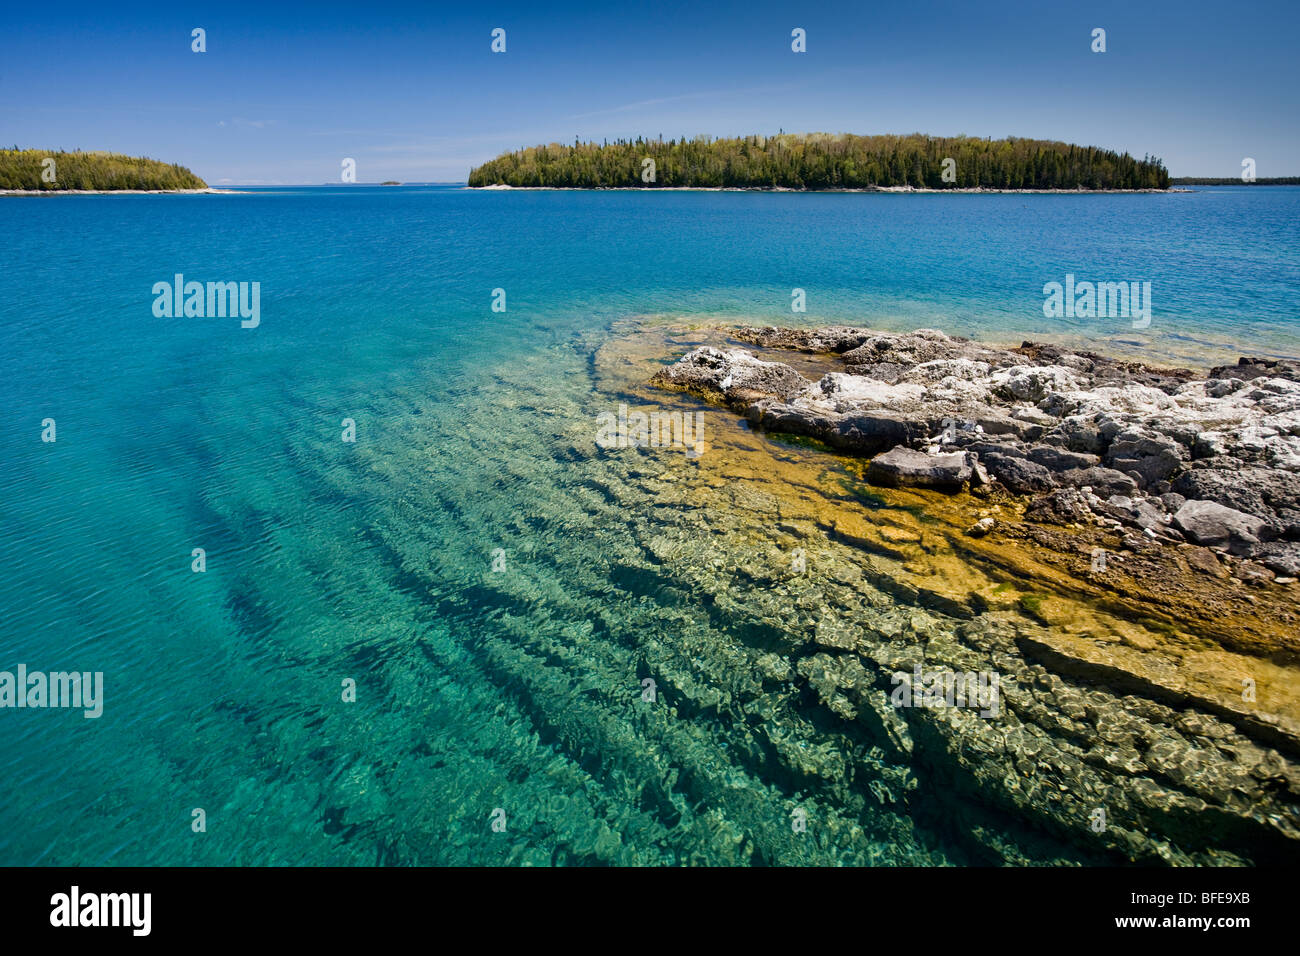 Small island in the Fathom Five National Marine Park, Lake Huron, Ontario, Canada Stock Photo